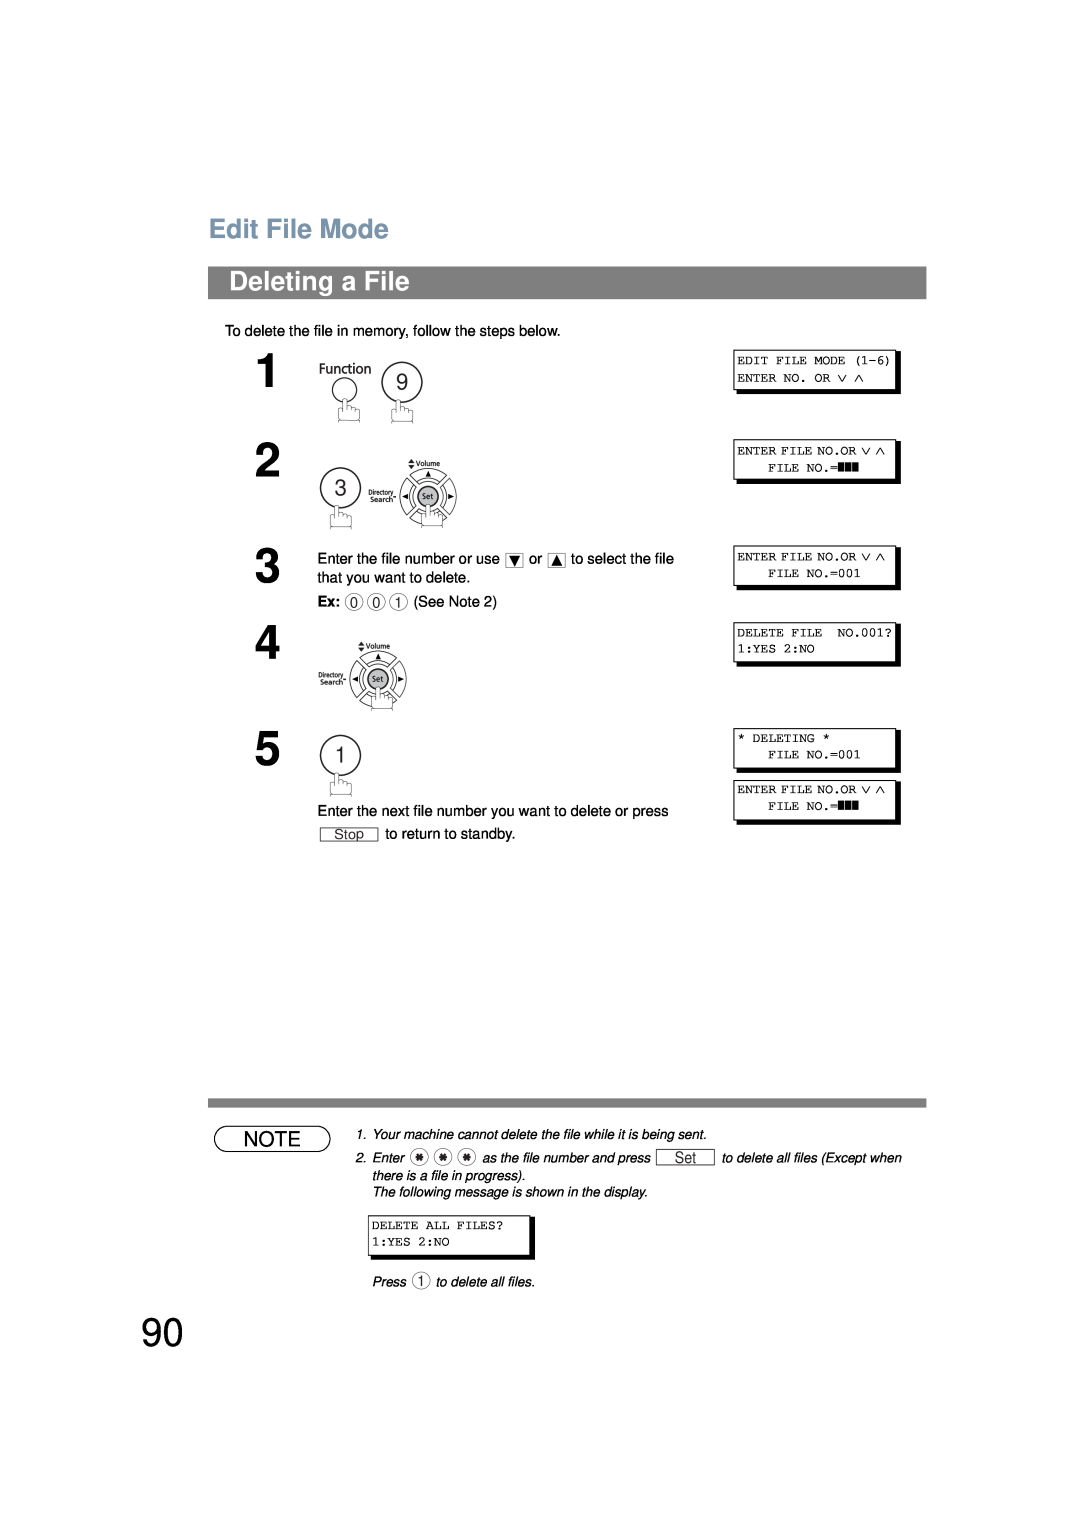 Panasonic UF-6200 operating instructions Deleting a File, Edit File Mode 